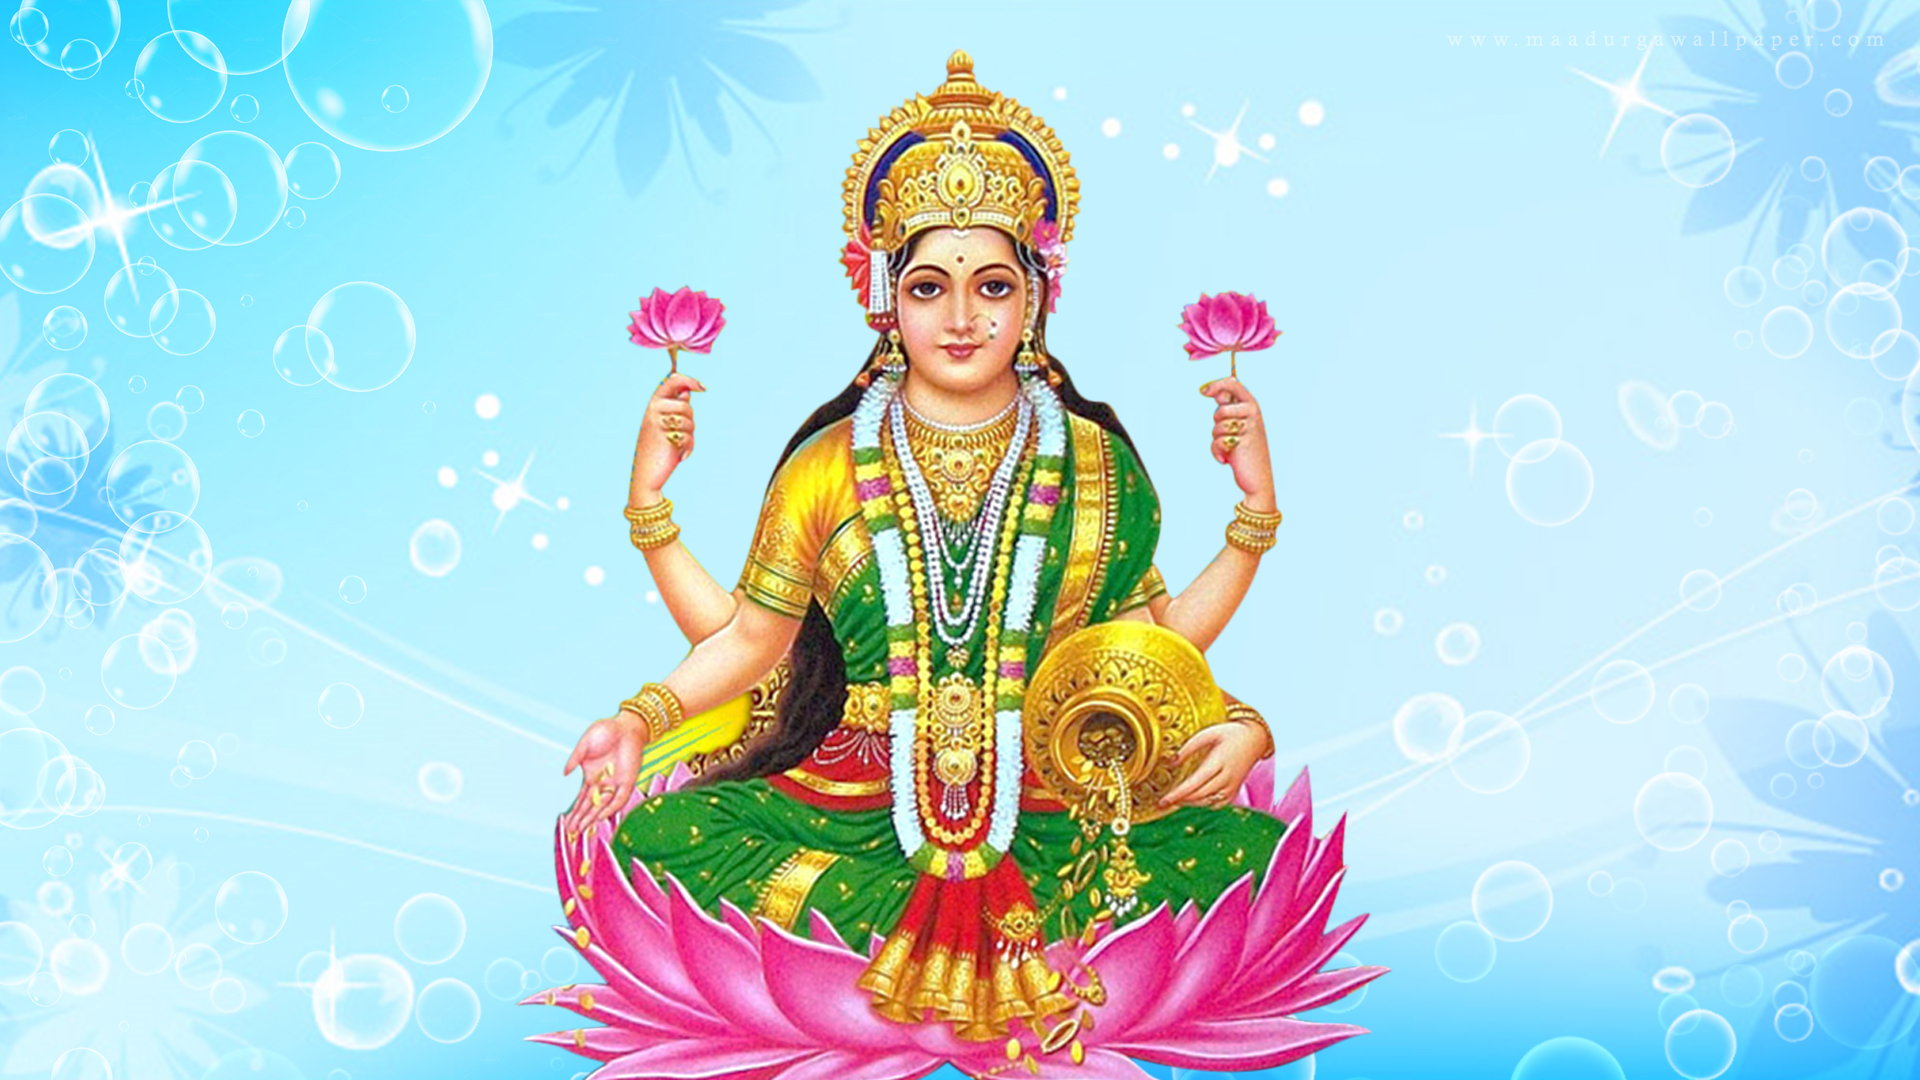 Maa Lakshmi Image - Goddess Laxmi - 1920x1080 Wallpaper 